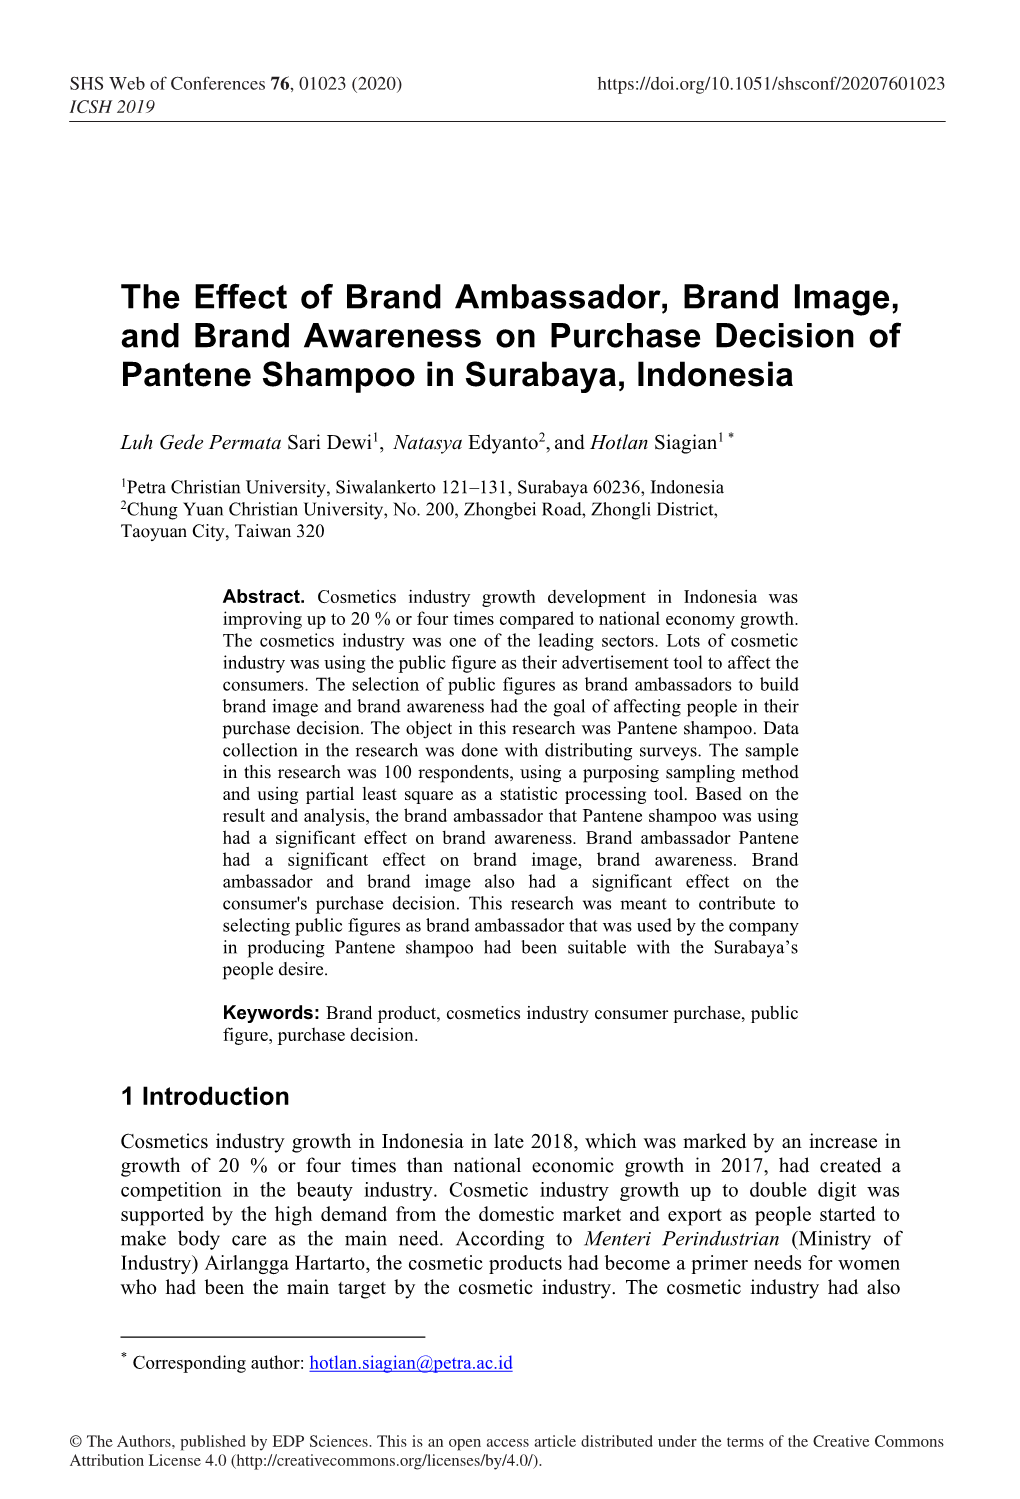 The Effect of Brand Ambassador, Brand Image, and Brand Awareness on Purchase Decision of Pantene Shampoo in Surabaya, Indonesia